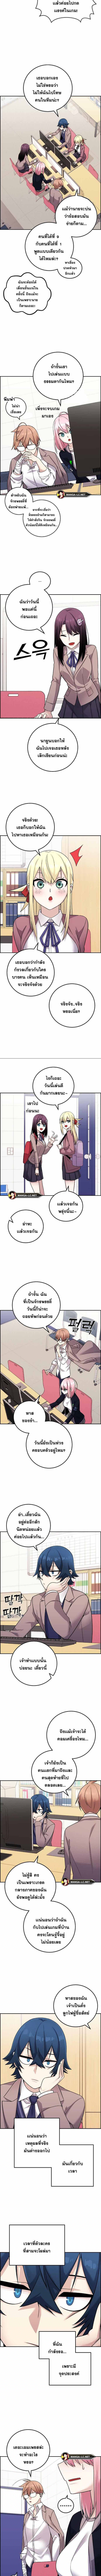 Webtoon Character Na Kang Lim ร ยธโ€ขร ยธยญร ยธโขร ยธโ€”ร ยธยตร ยนห 34 (2)